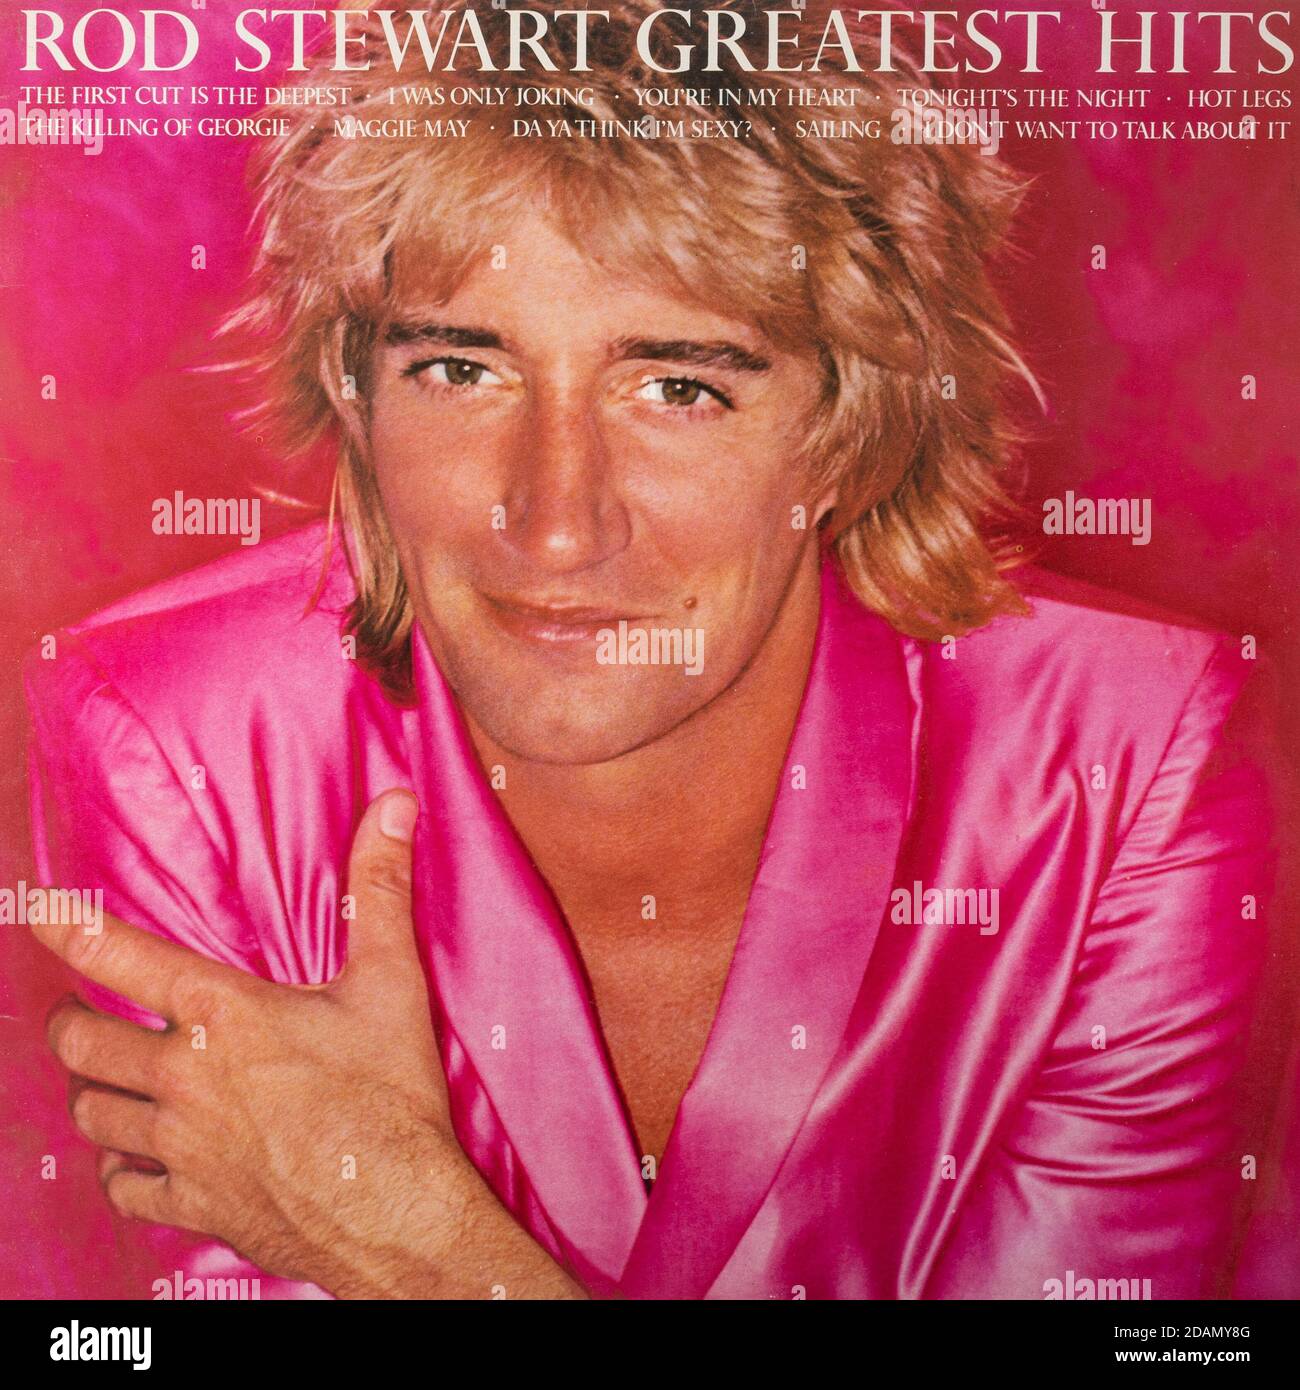 Rod Stewart Greatest Hits volume 1 vinyl LP record album cover Stock Photo